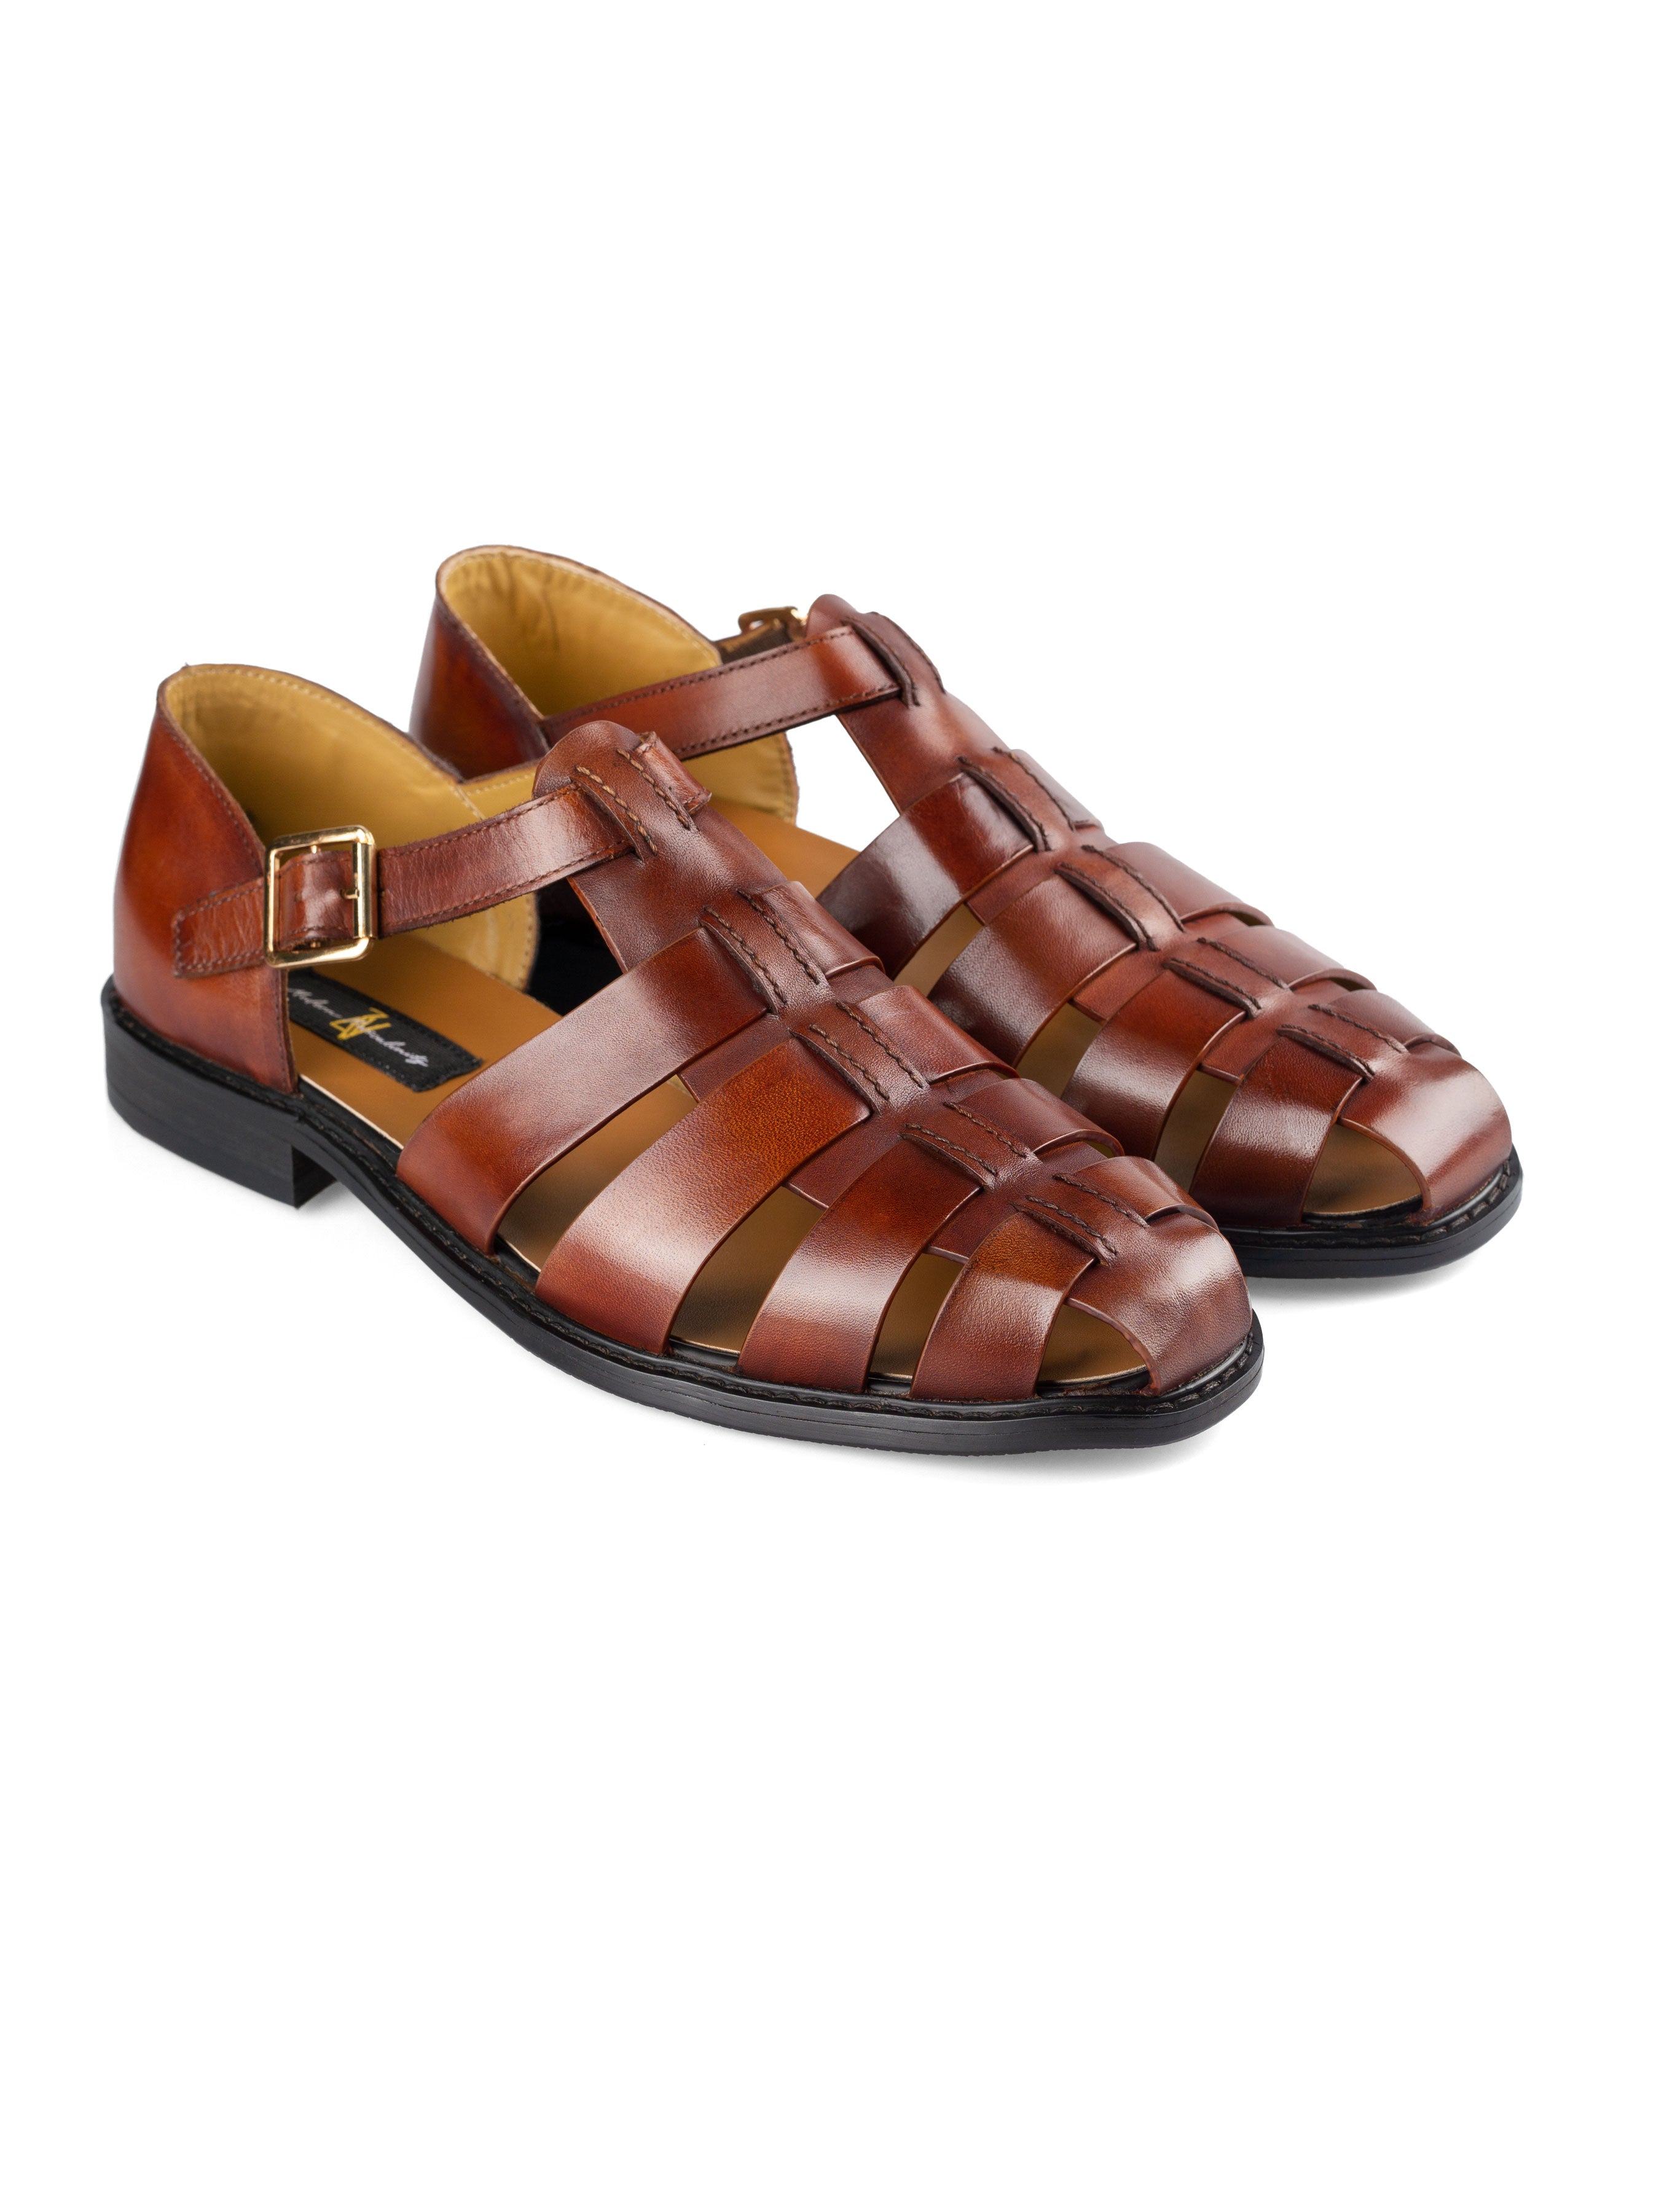 Fisherman Cage Sandal - Cognac Tan (Hand Painted Patina) - Zeve Shoes